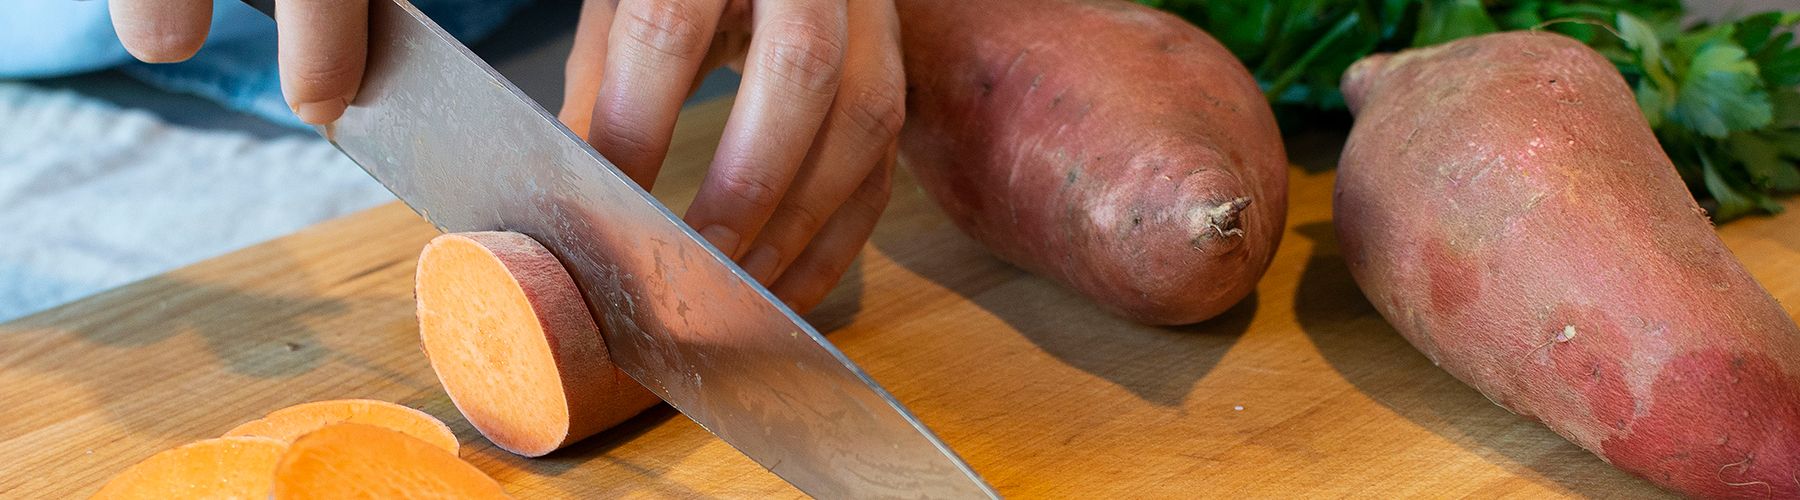 Hands Cutting Sweet Potatoes